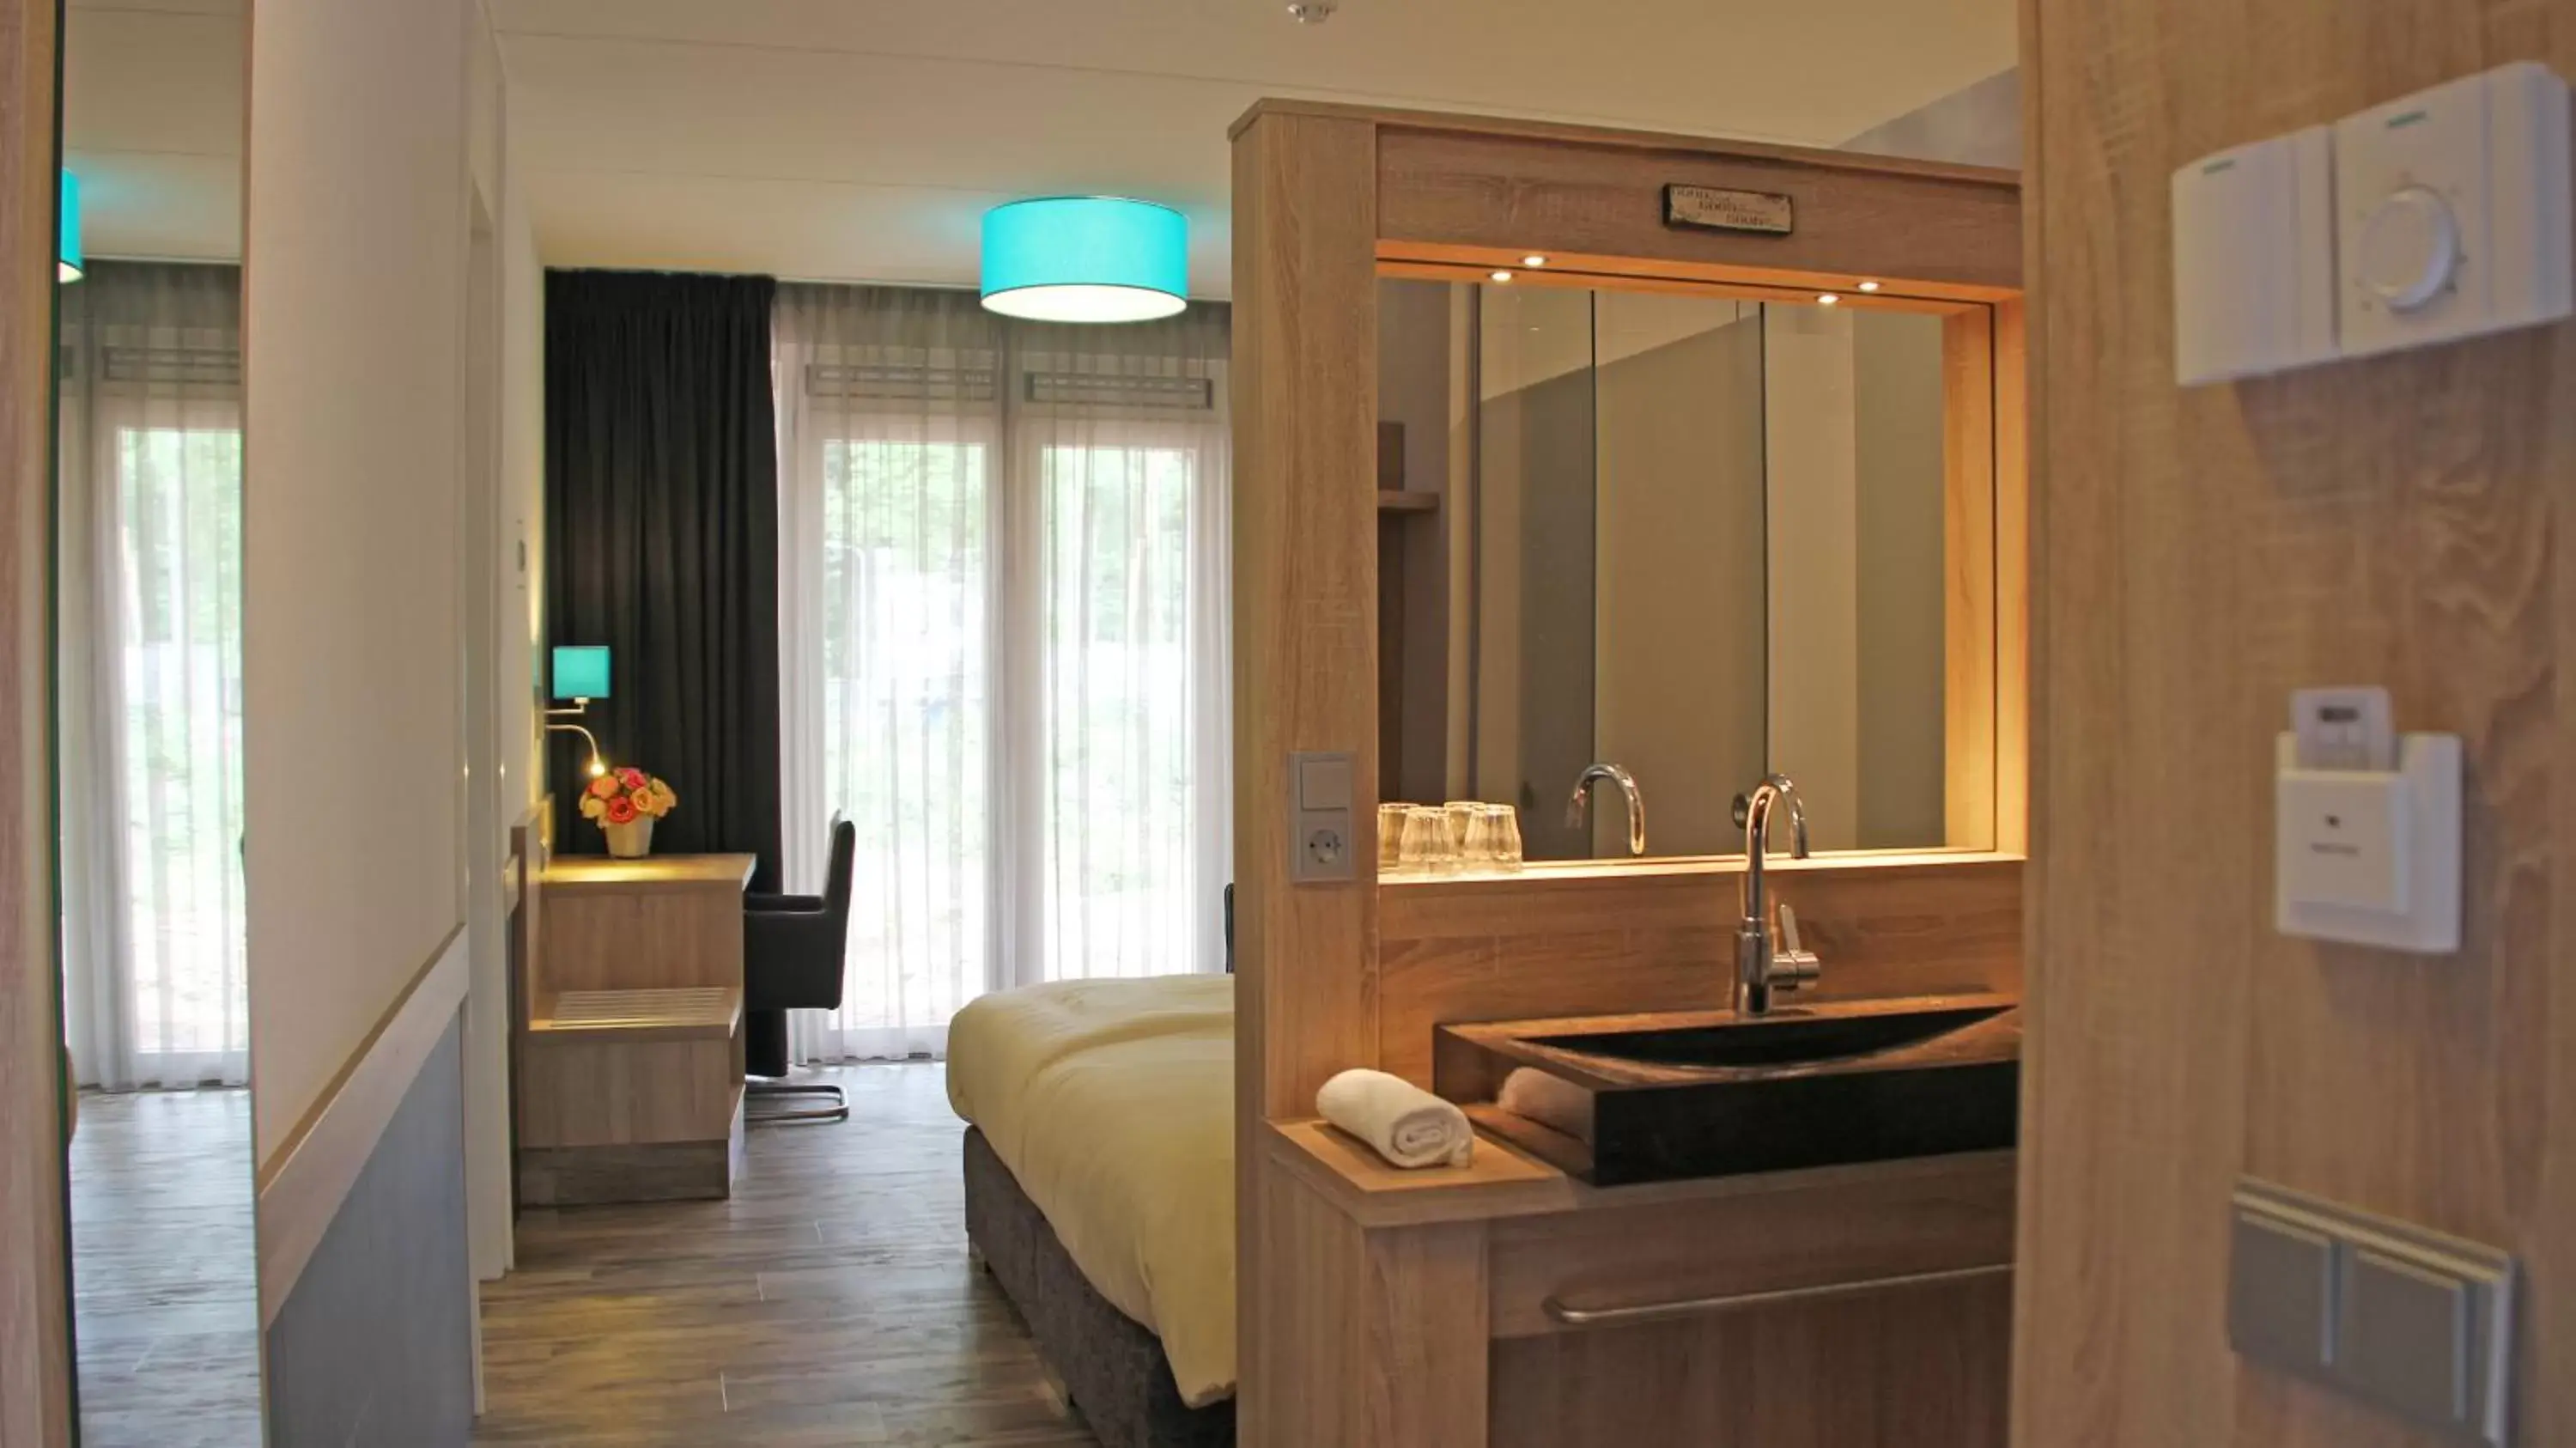 Photo of the whole room, Bathroom in Hotel Erve Hulsbeek